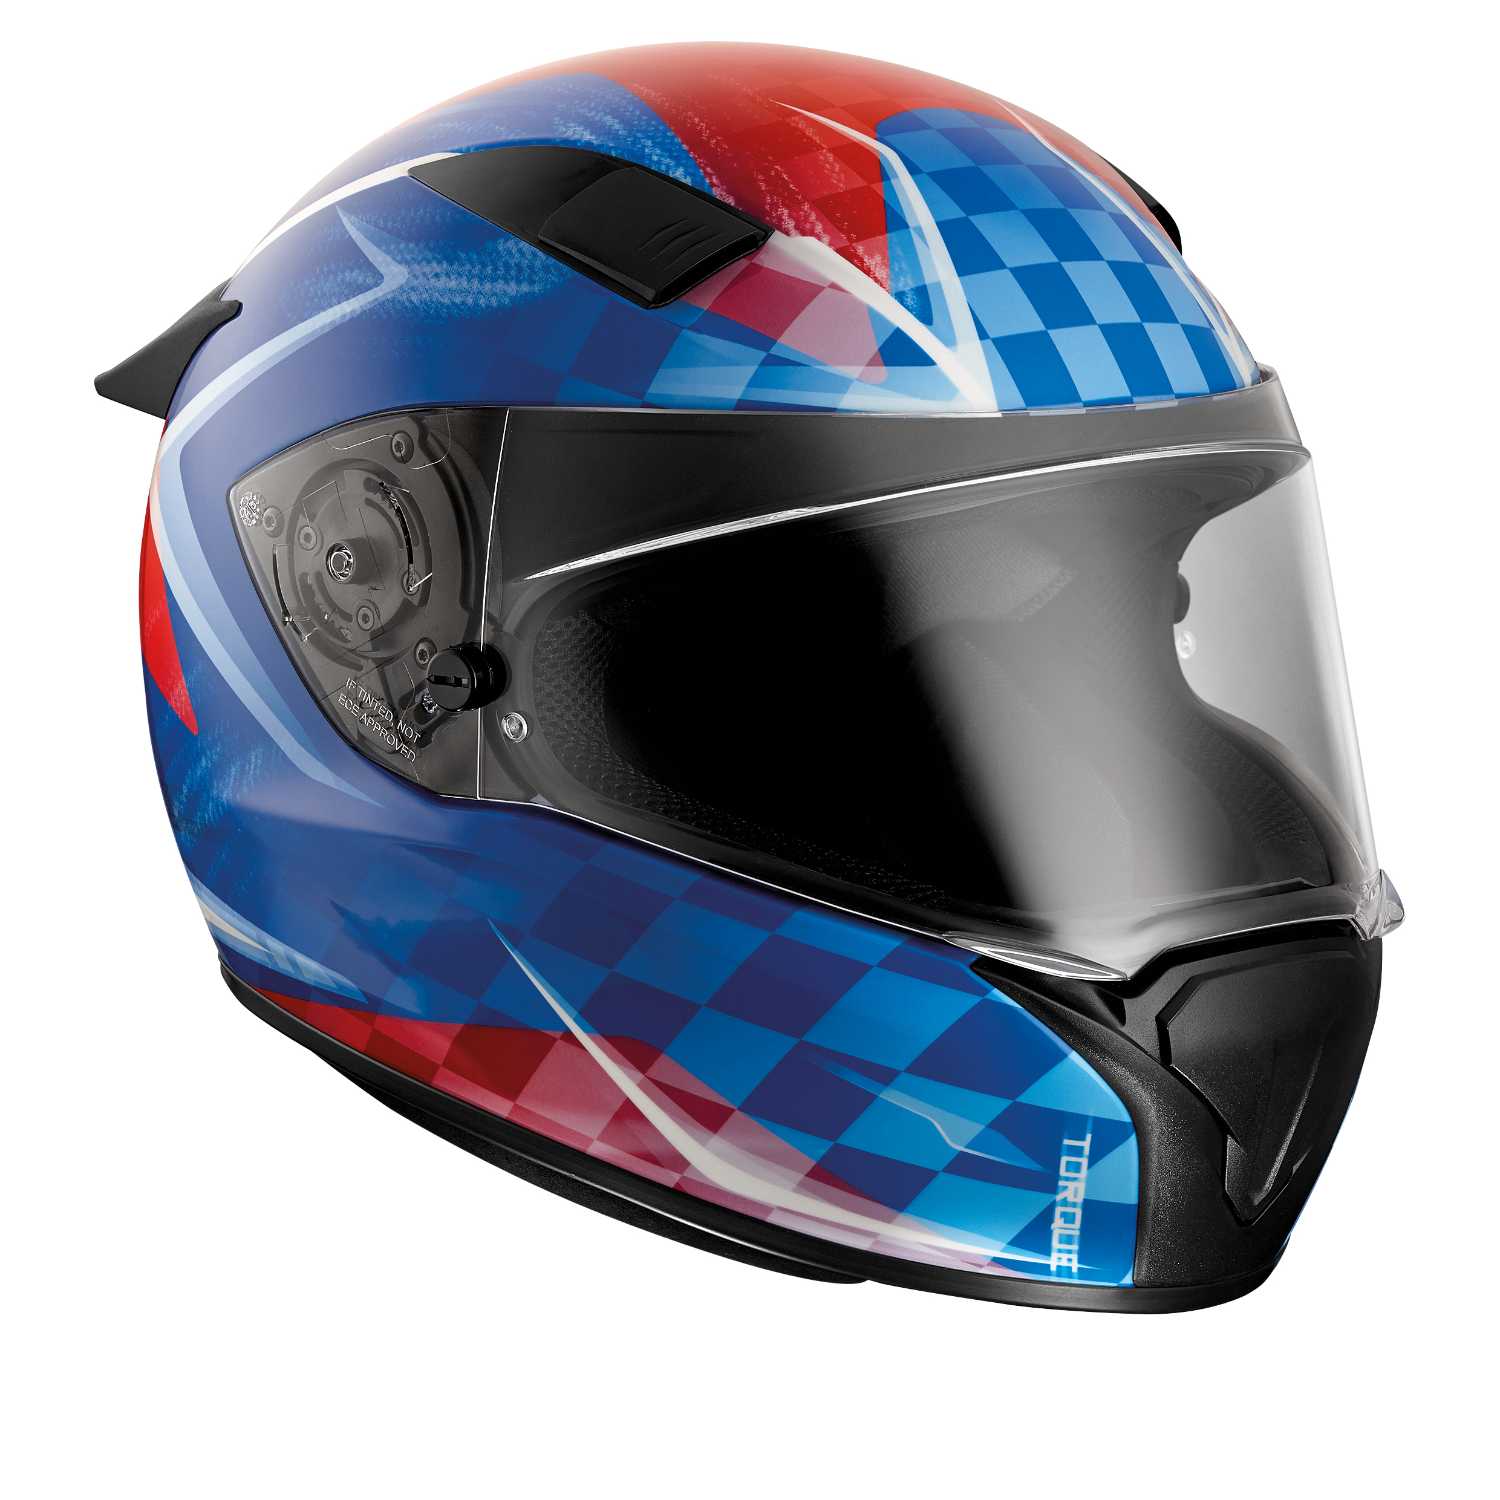 BMW Motorrad Rider's Equipment Ride 2014, Race helmet (11/2013)